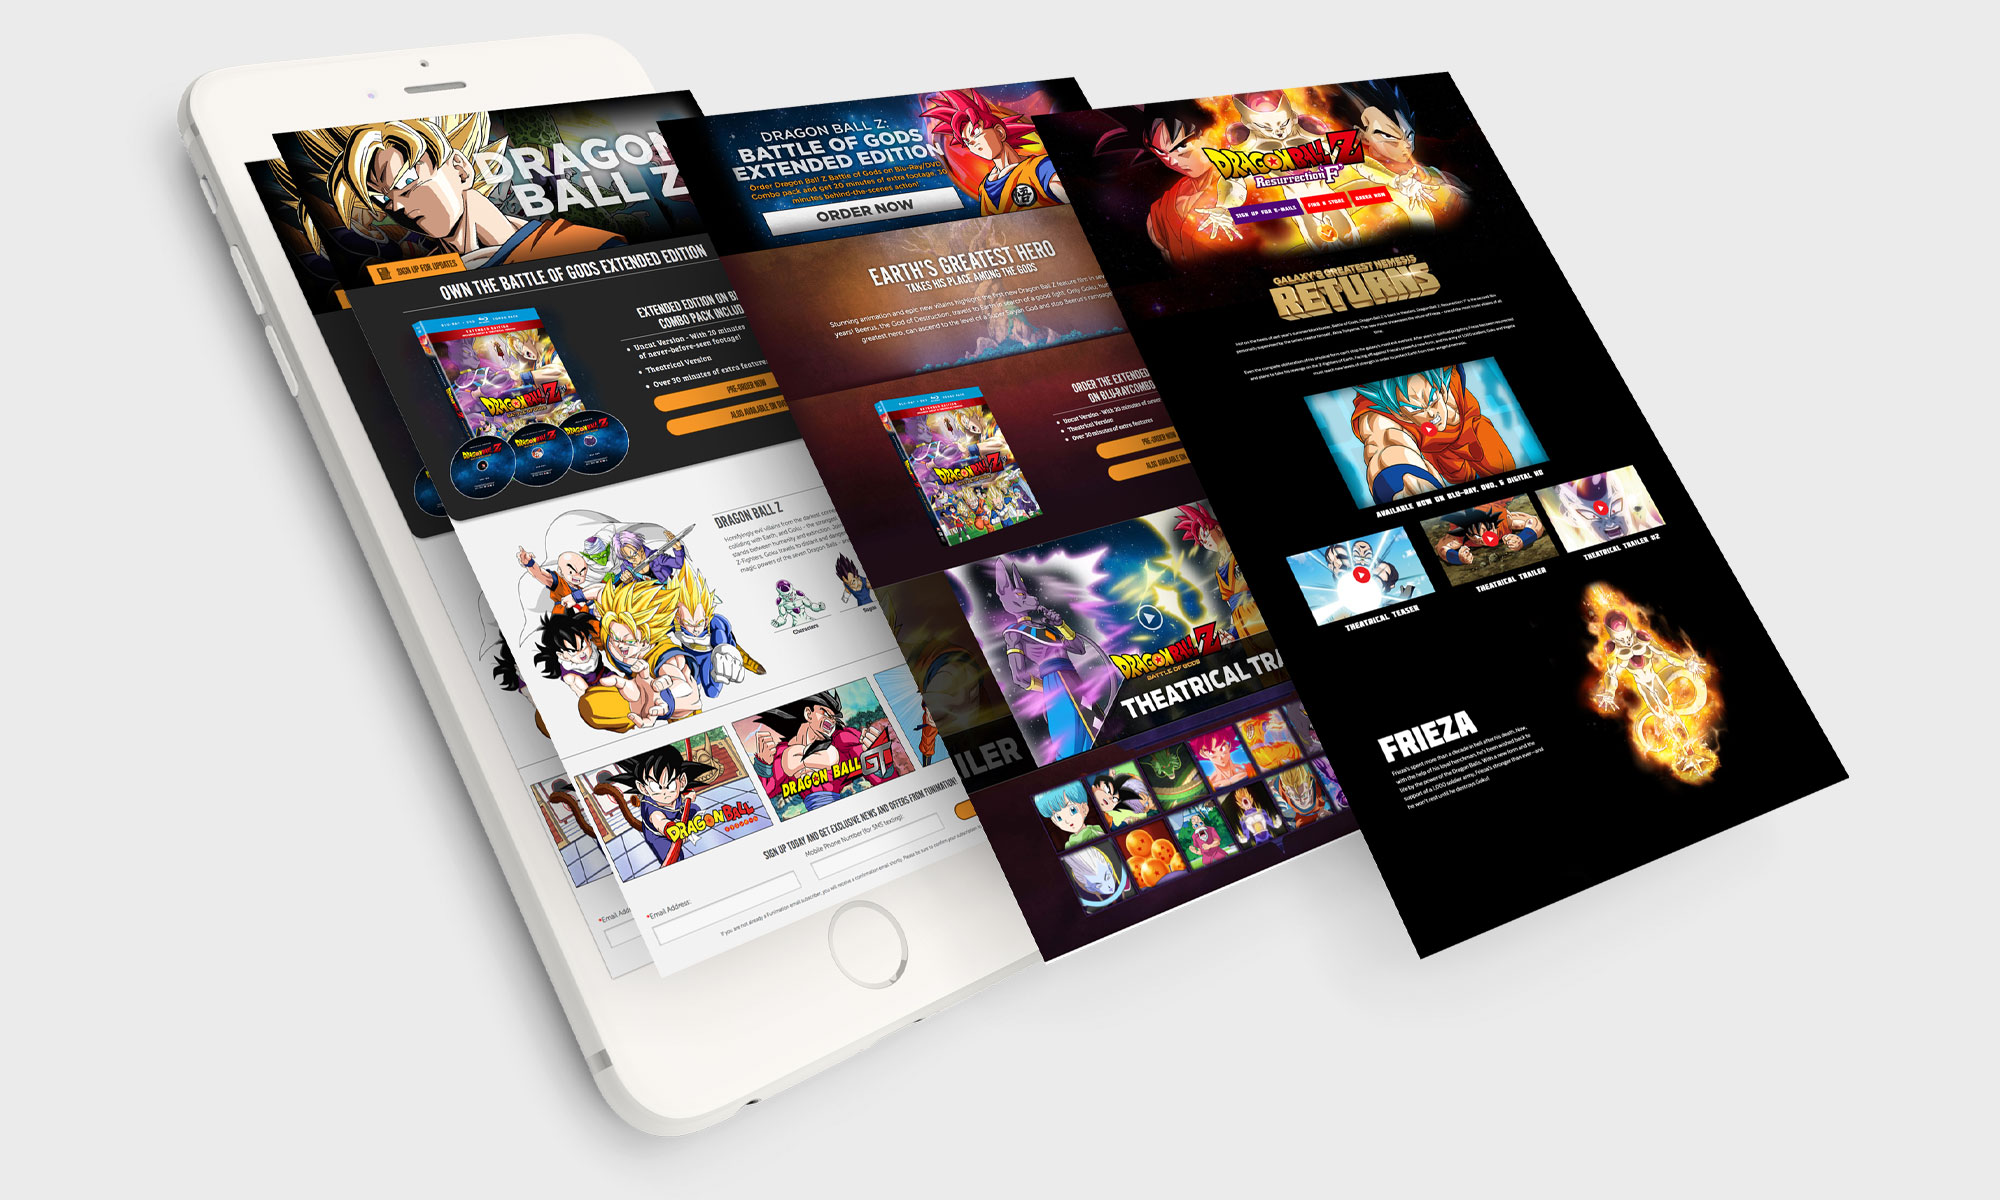 Dragon Ball Z's fullscreen image